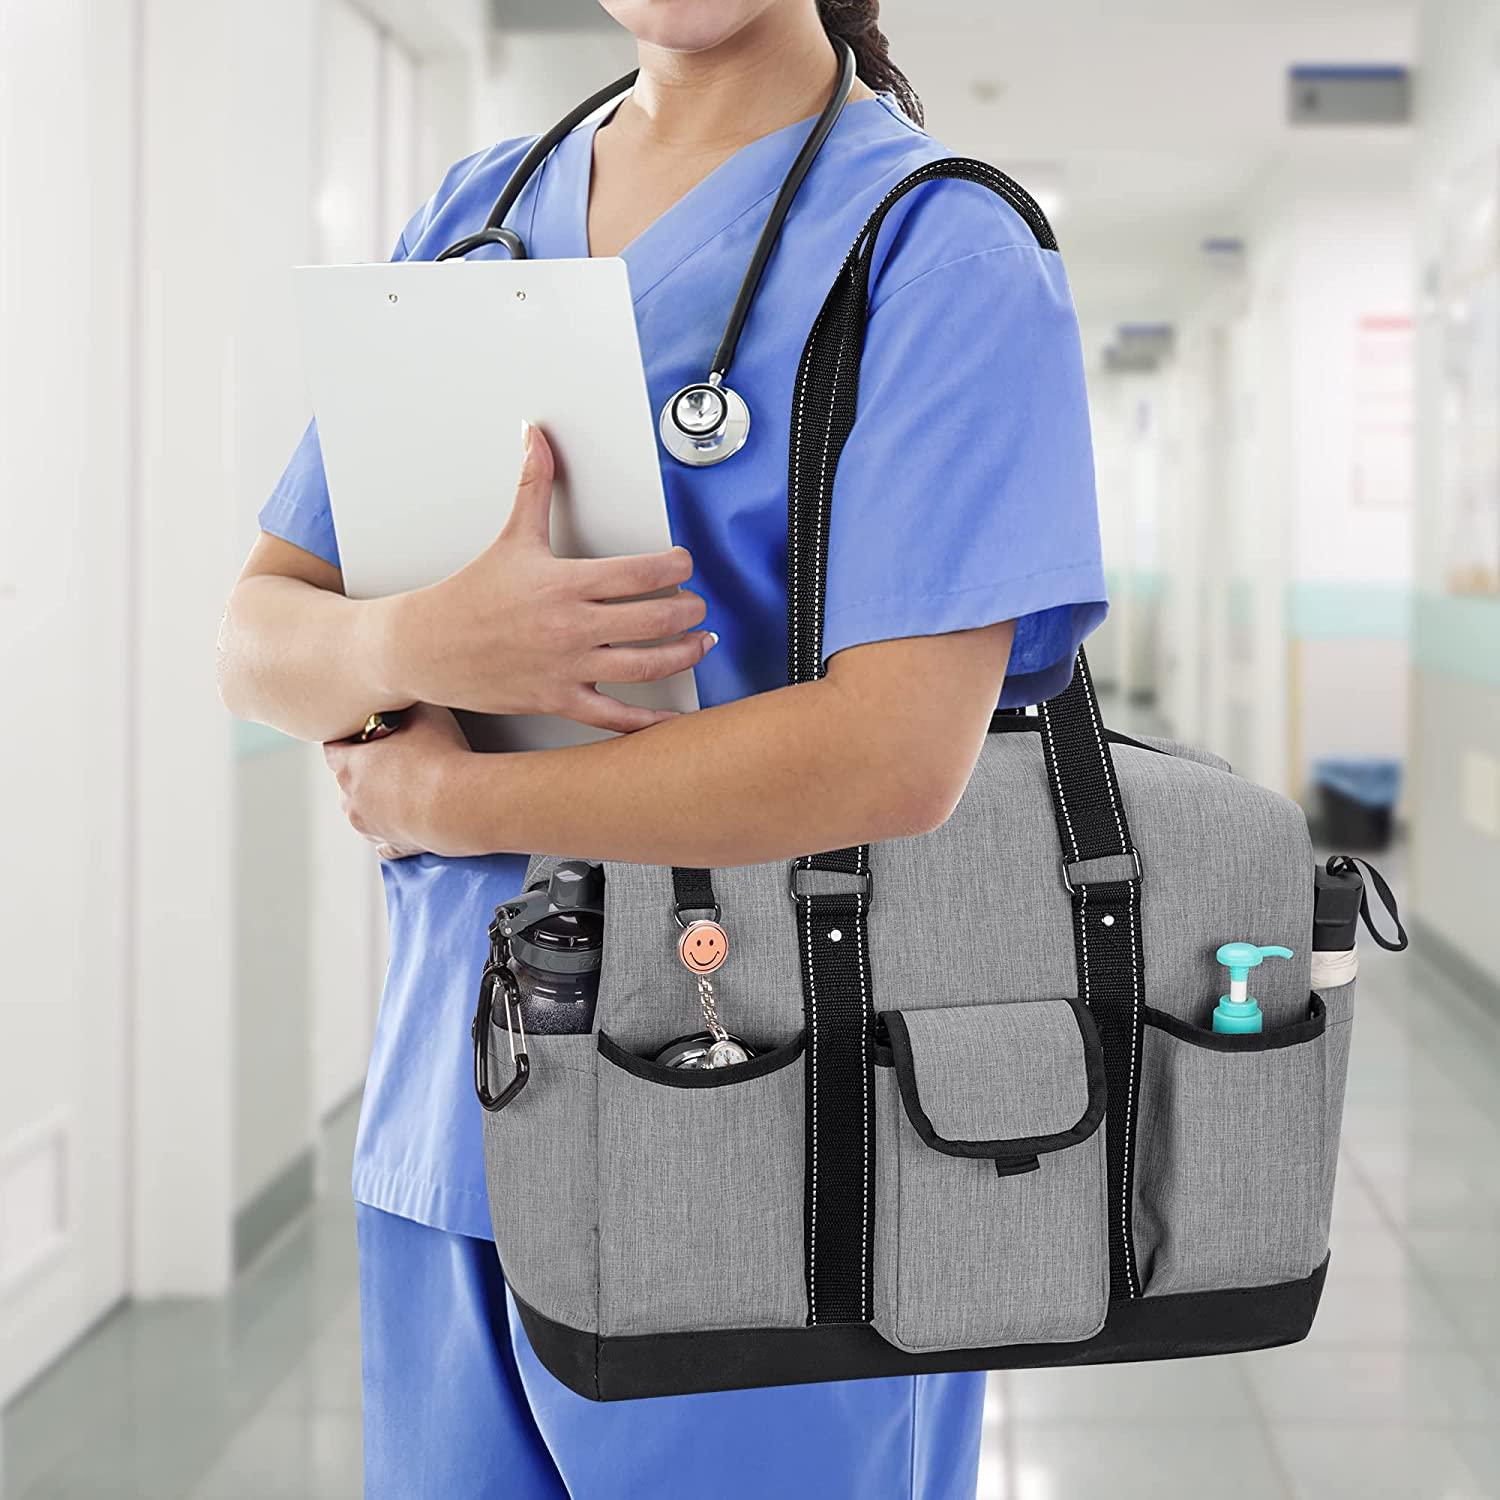  Damero Nurse Tote Bags with Organizer Insert Bag